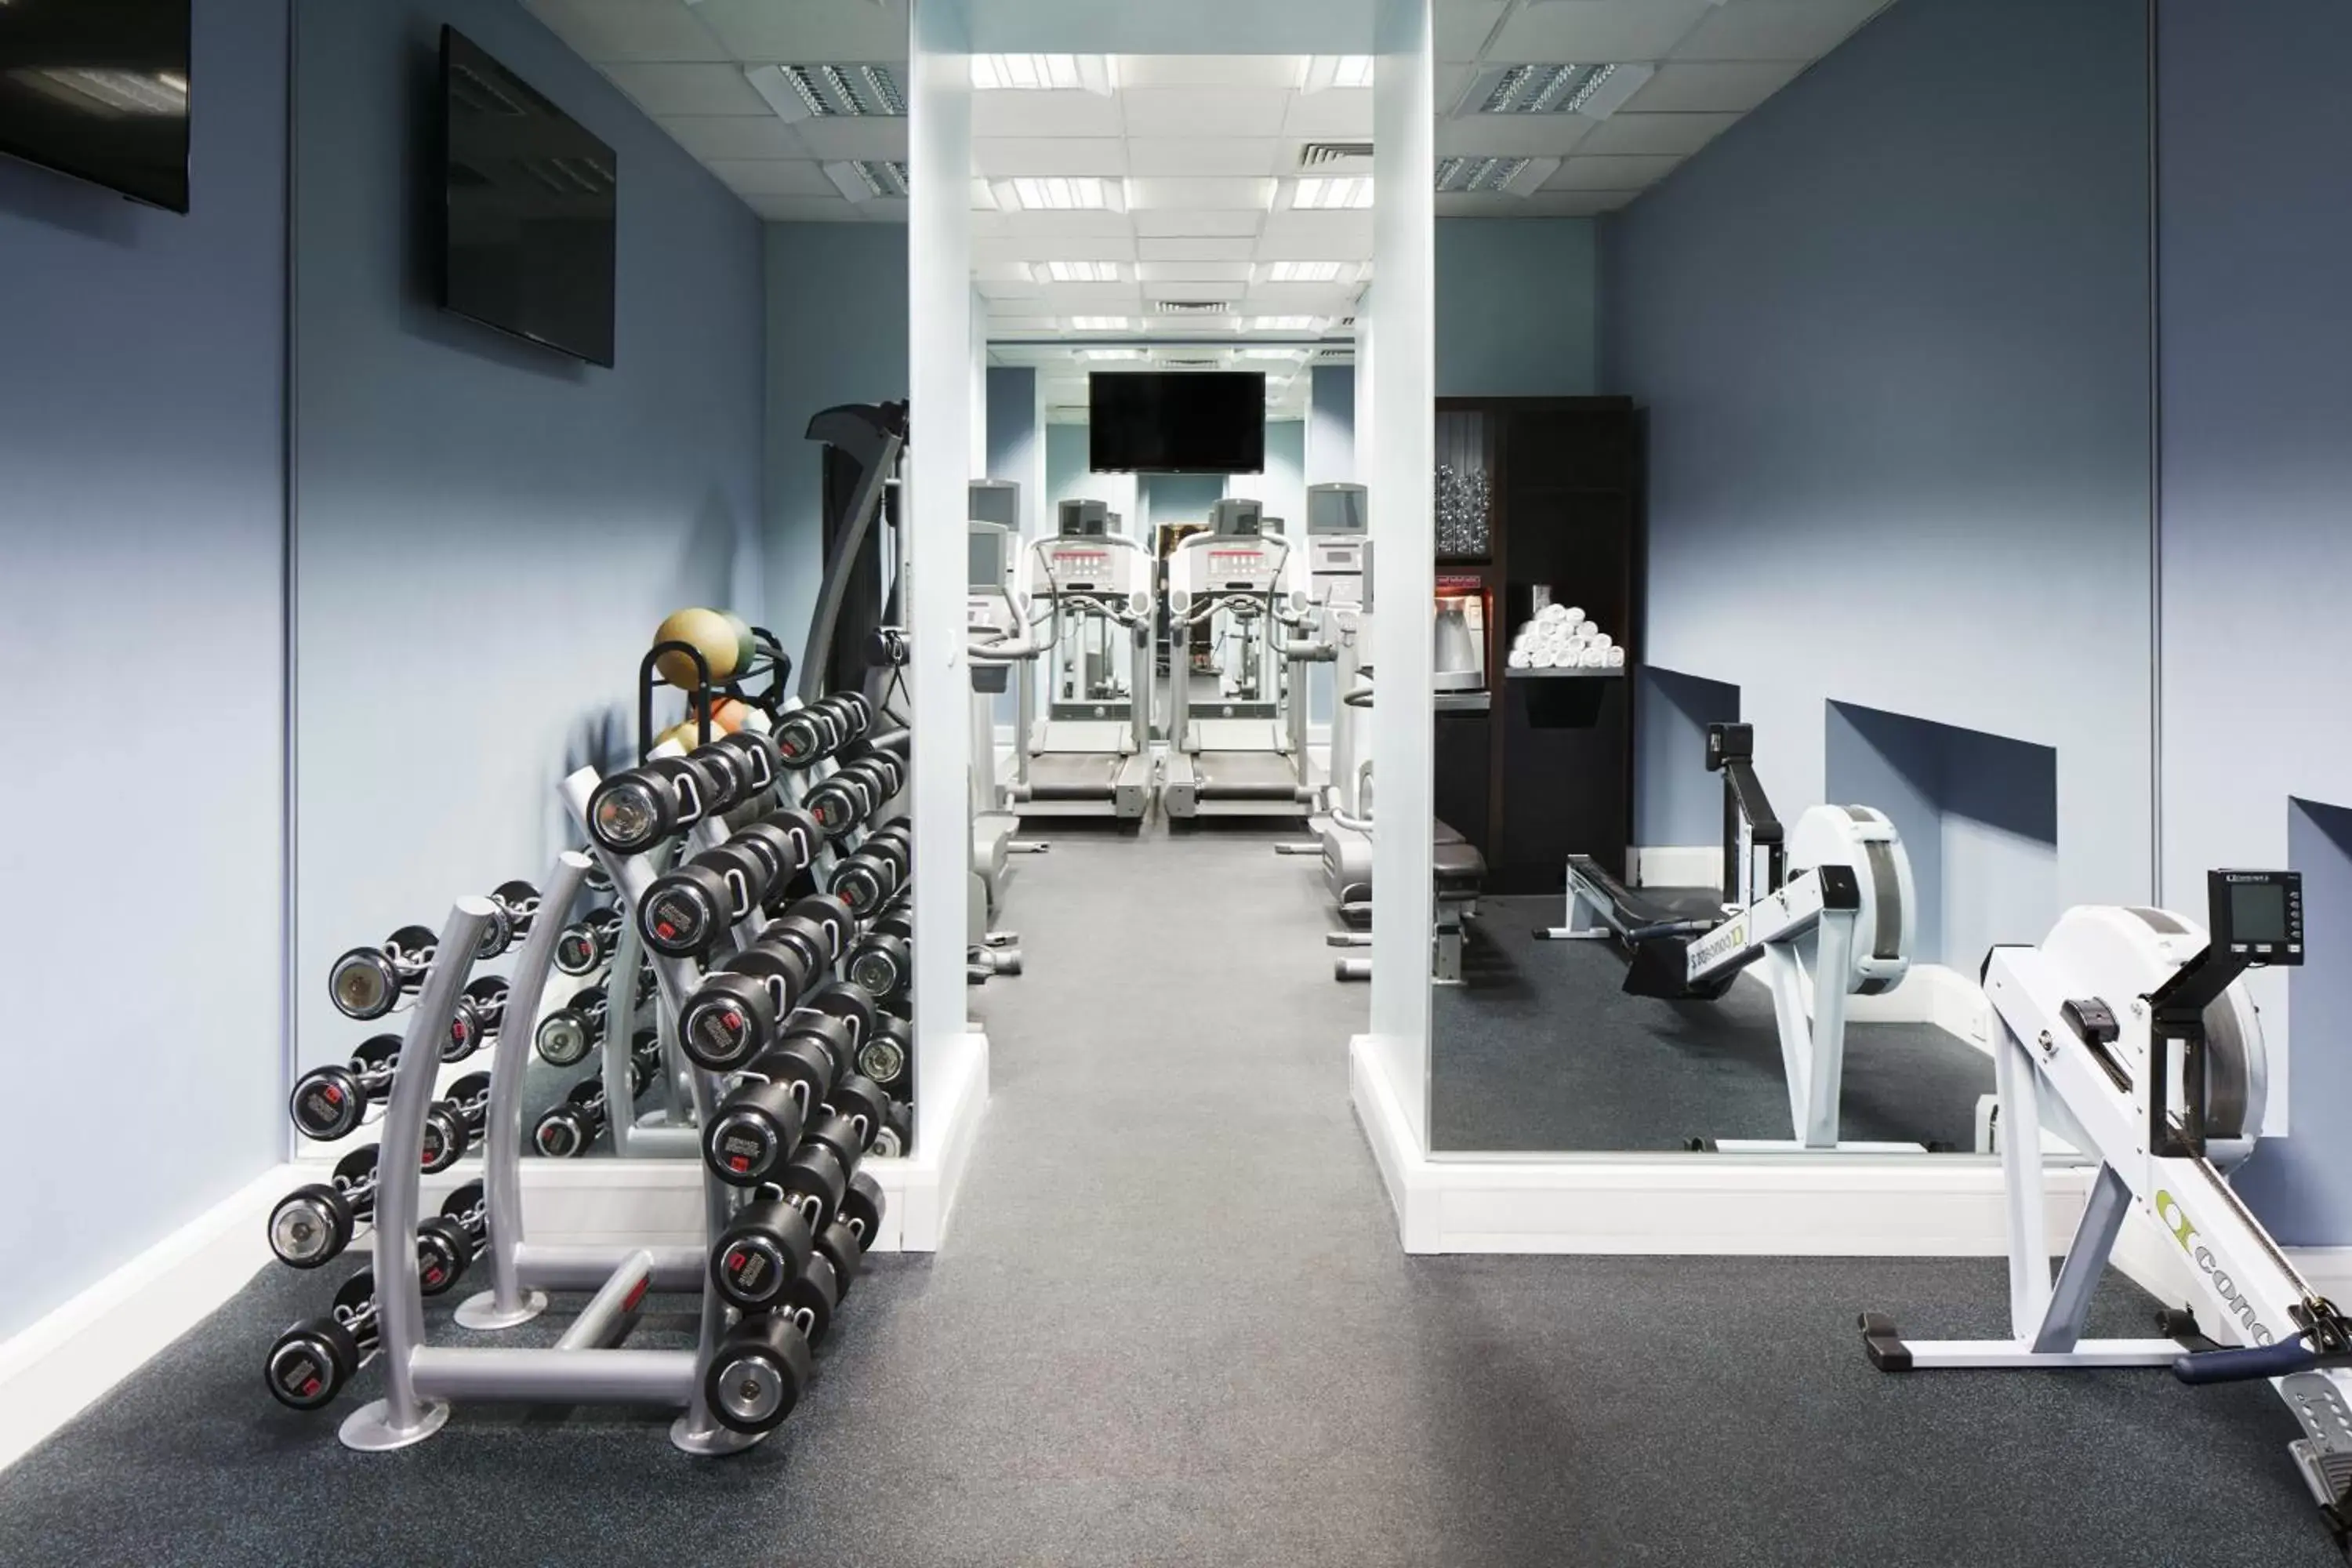 Fitness centre/facilities, Fitness Center/Facilities in Club Quarters Hotel Trafalgar Square, London